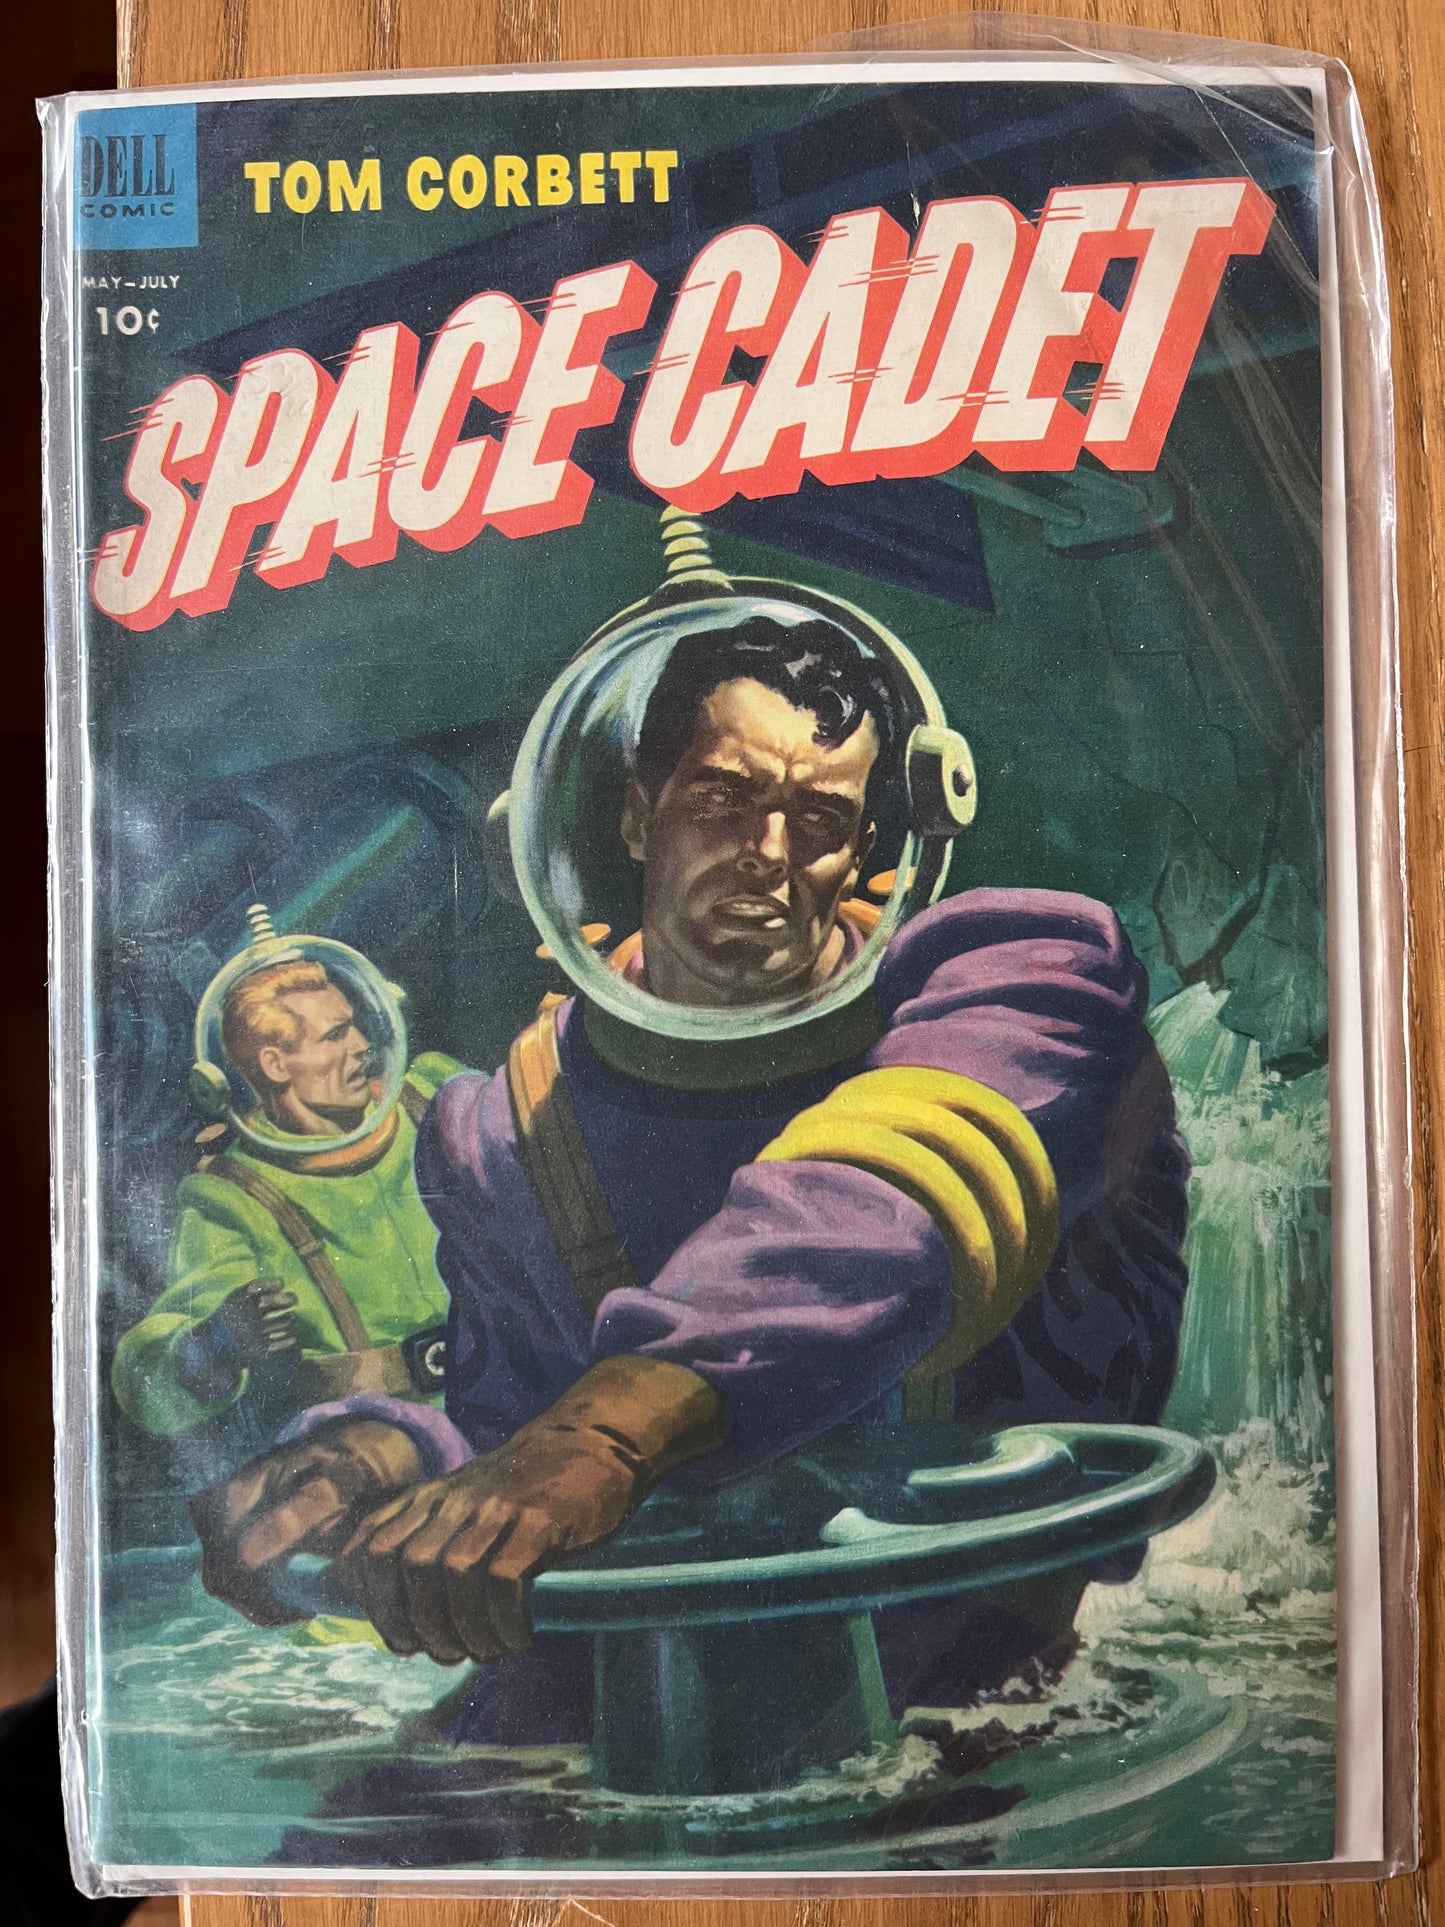 TOM CORBETT, SPACE CADET (original comic book)